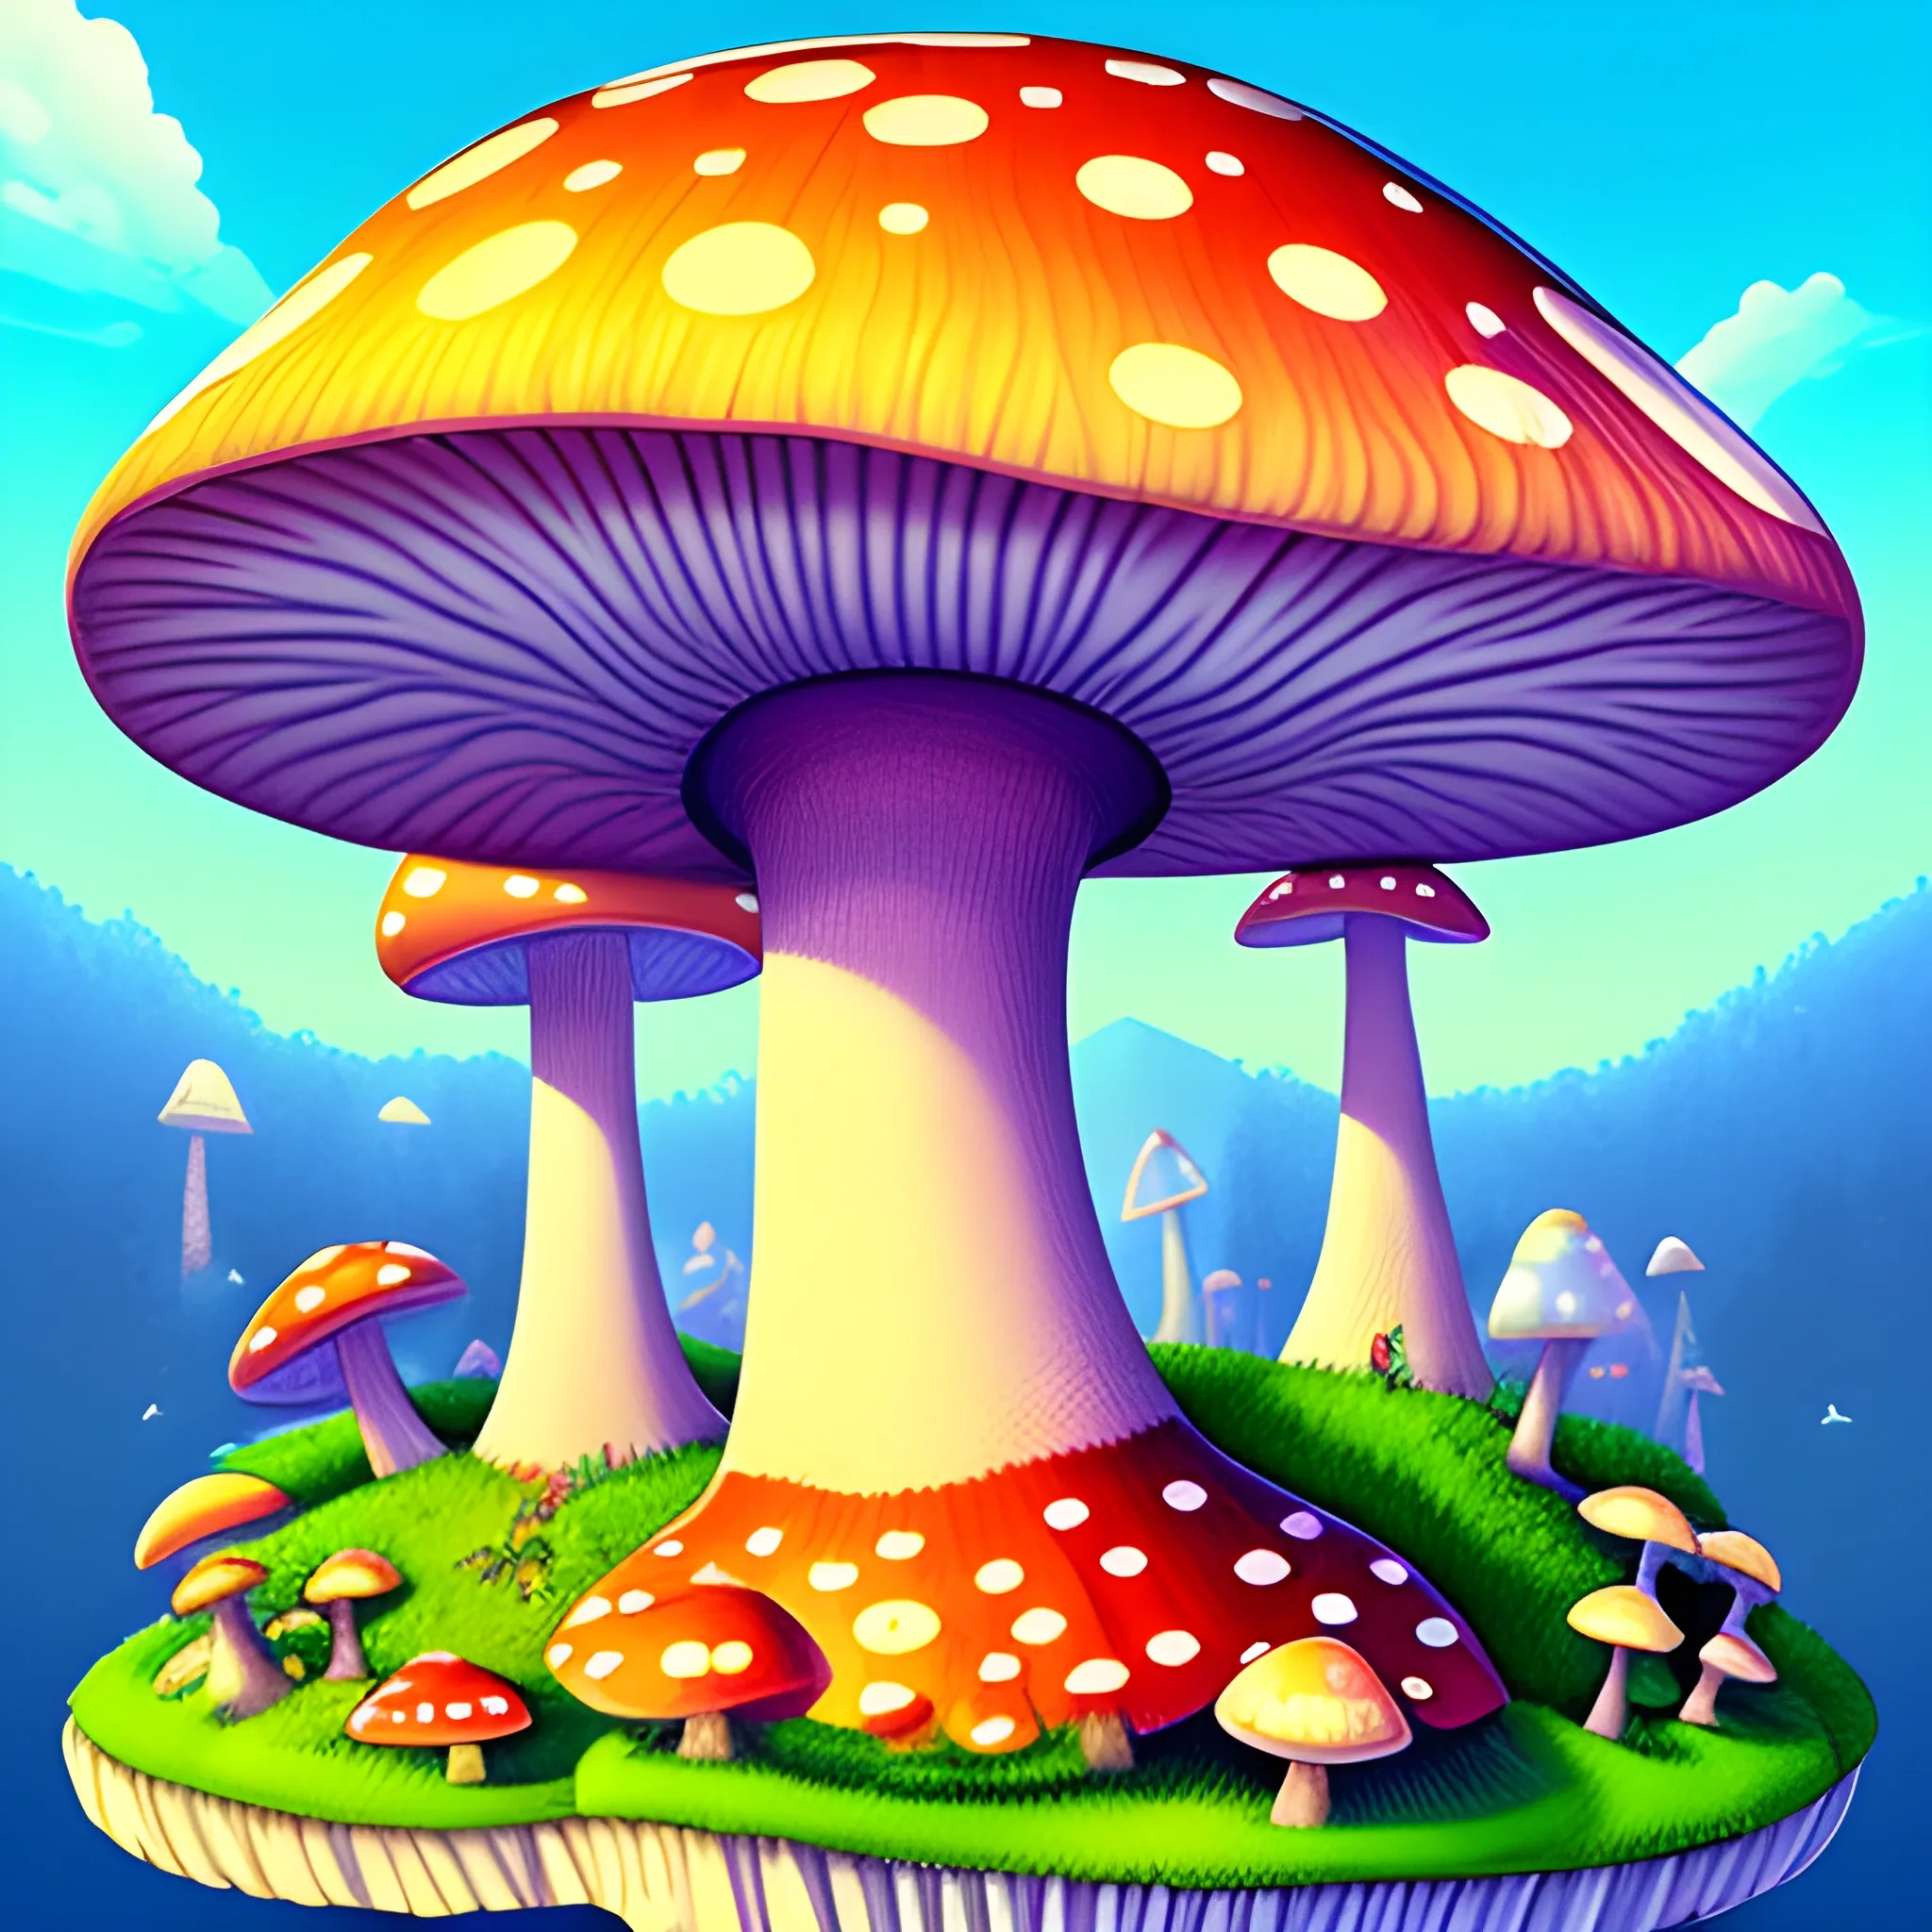 giant mushroom world 